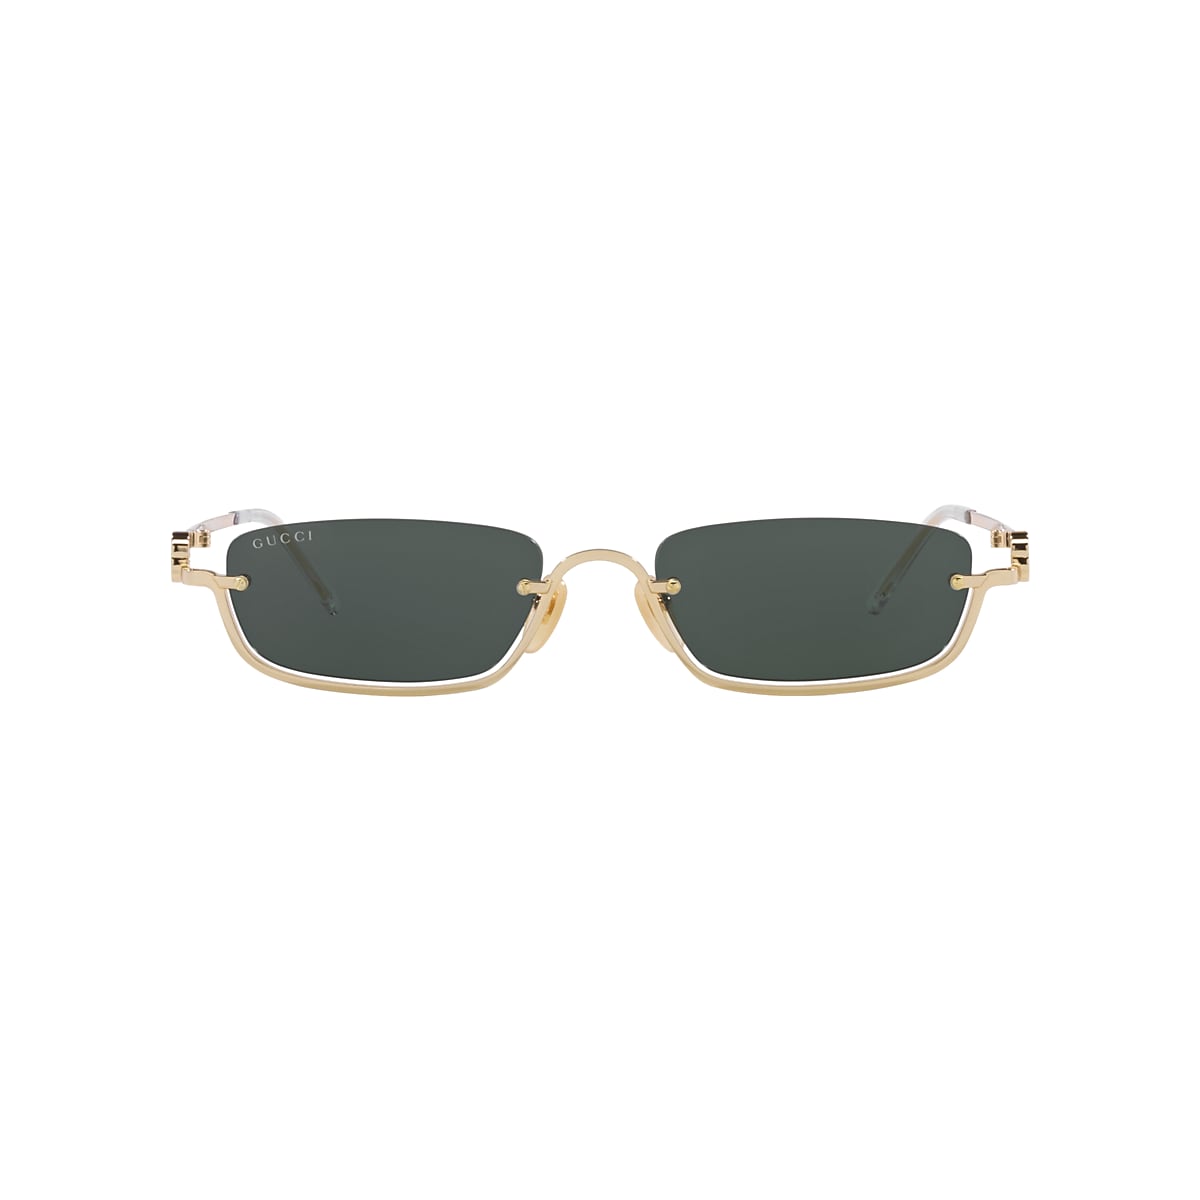 Gucci GG1278S 55 Green & Gold Sunglasses | Sunglass Hut USA